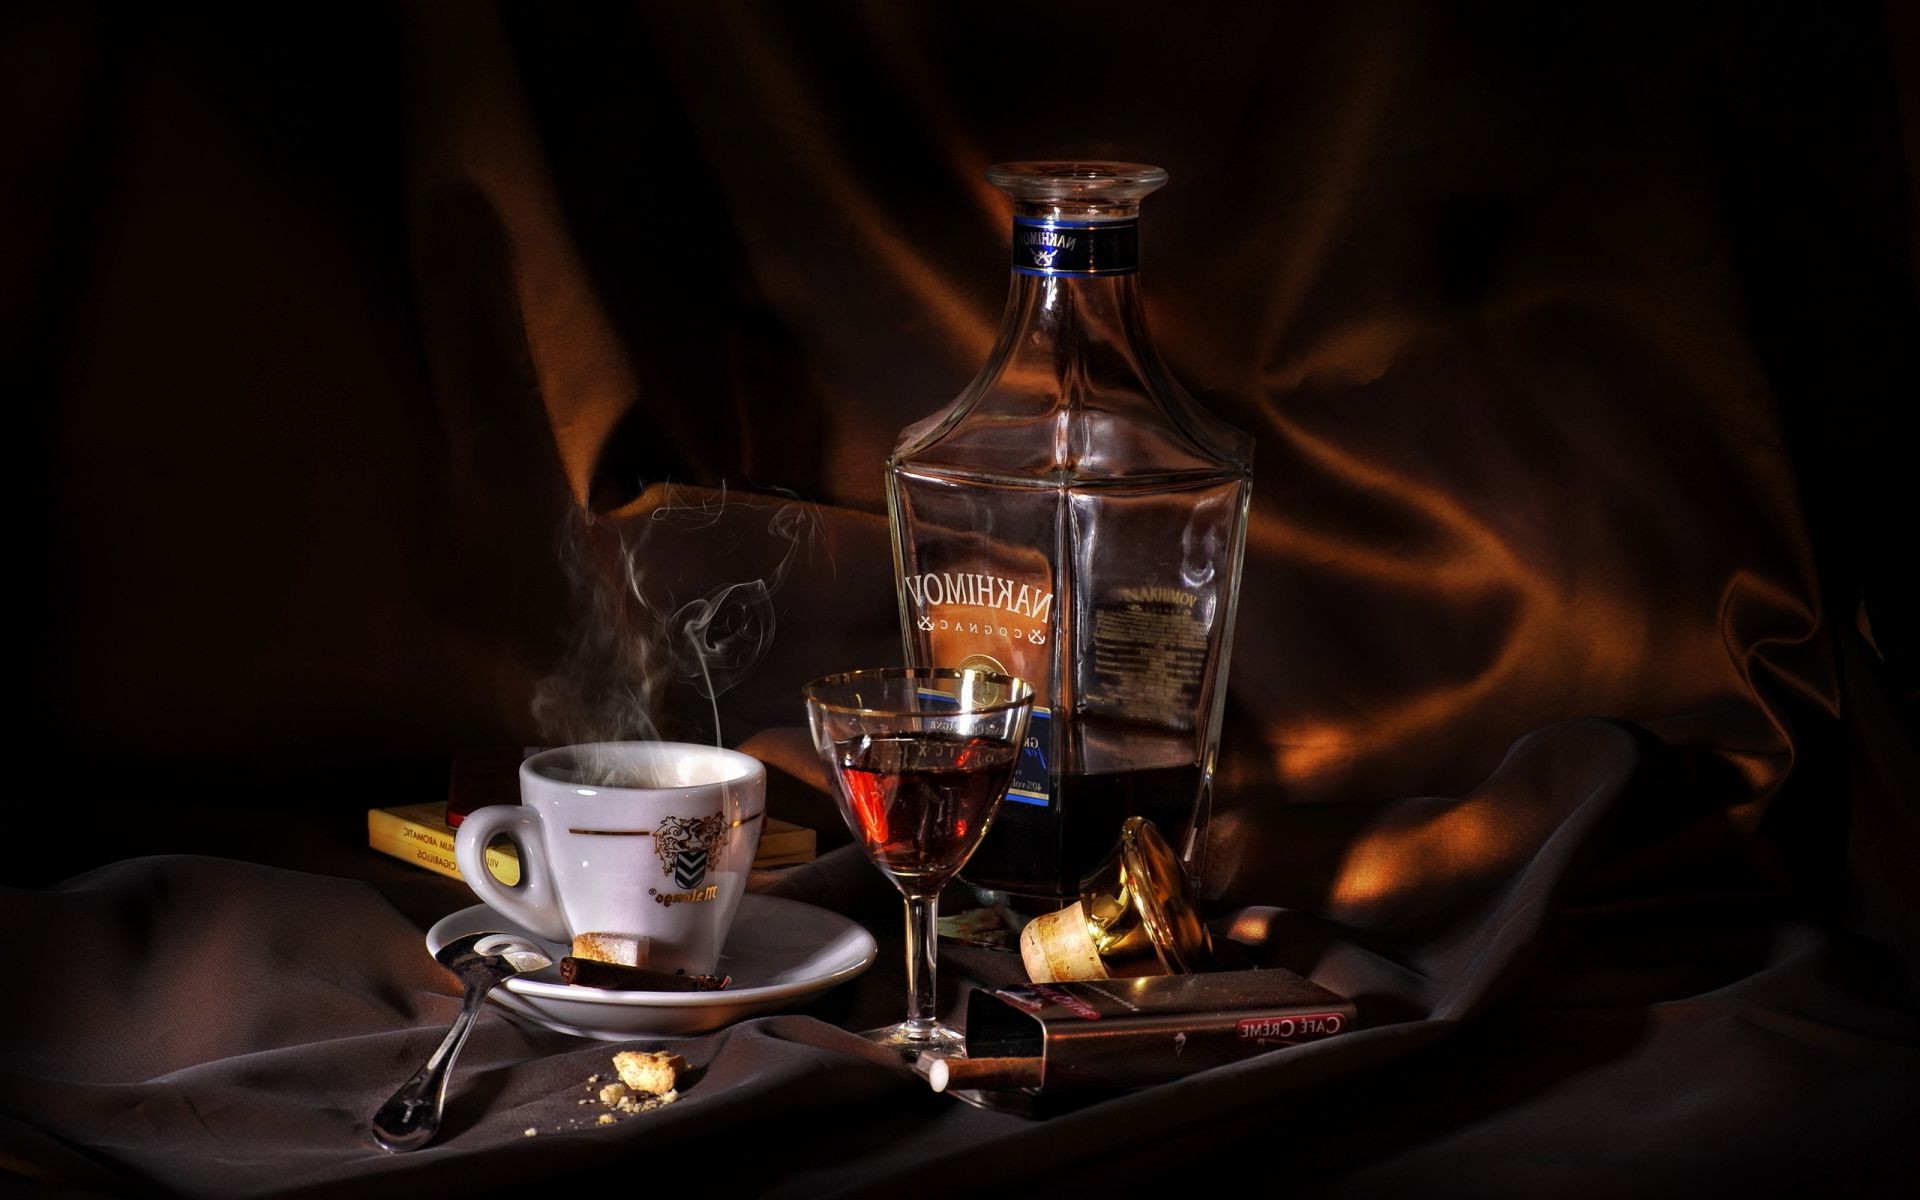 drinks drink hot flame dark wine glass cup still life bar restaurant whisky